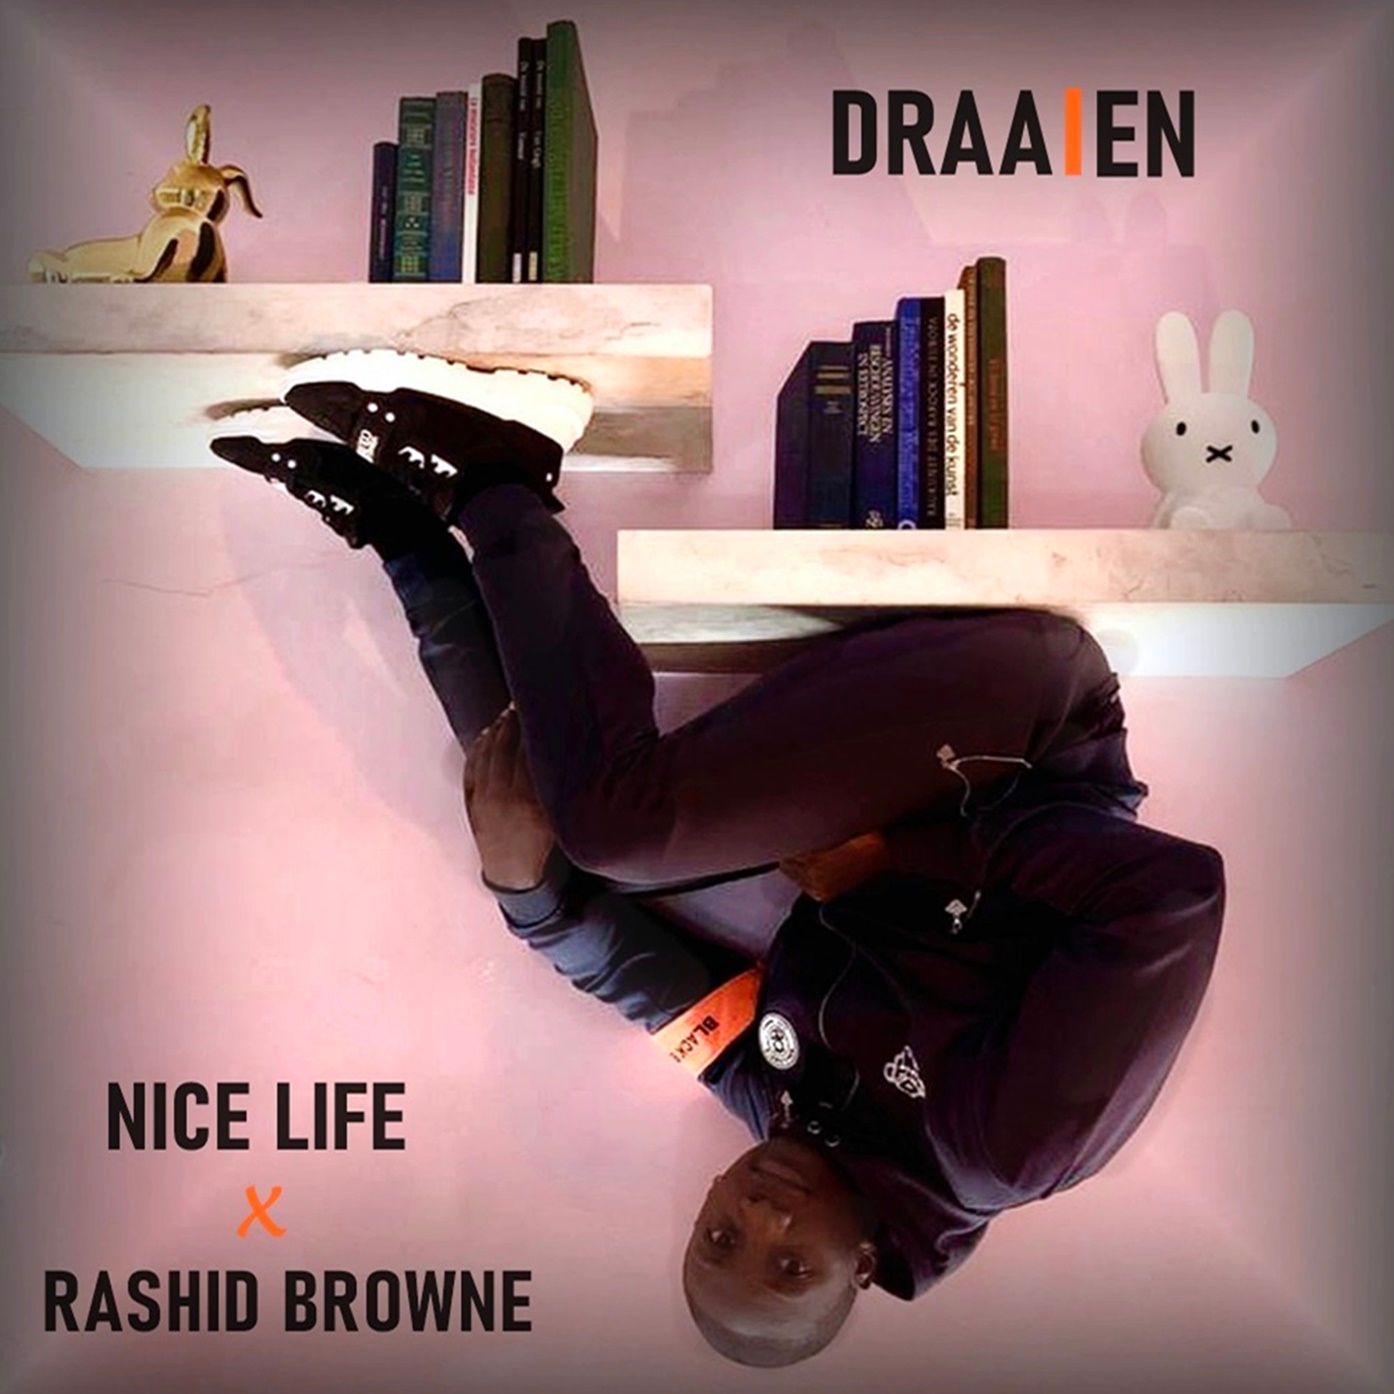 Descarca Draaien  - Nice Life x Rashid Browne